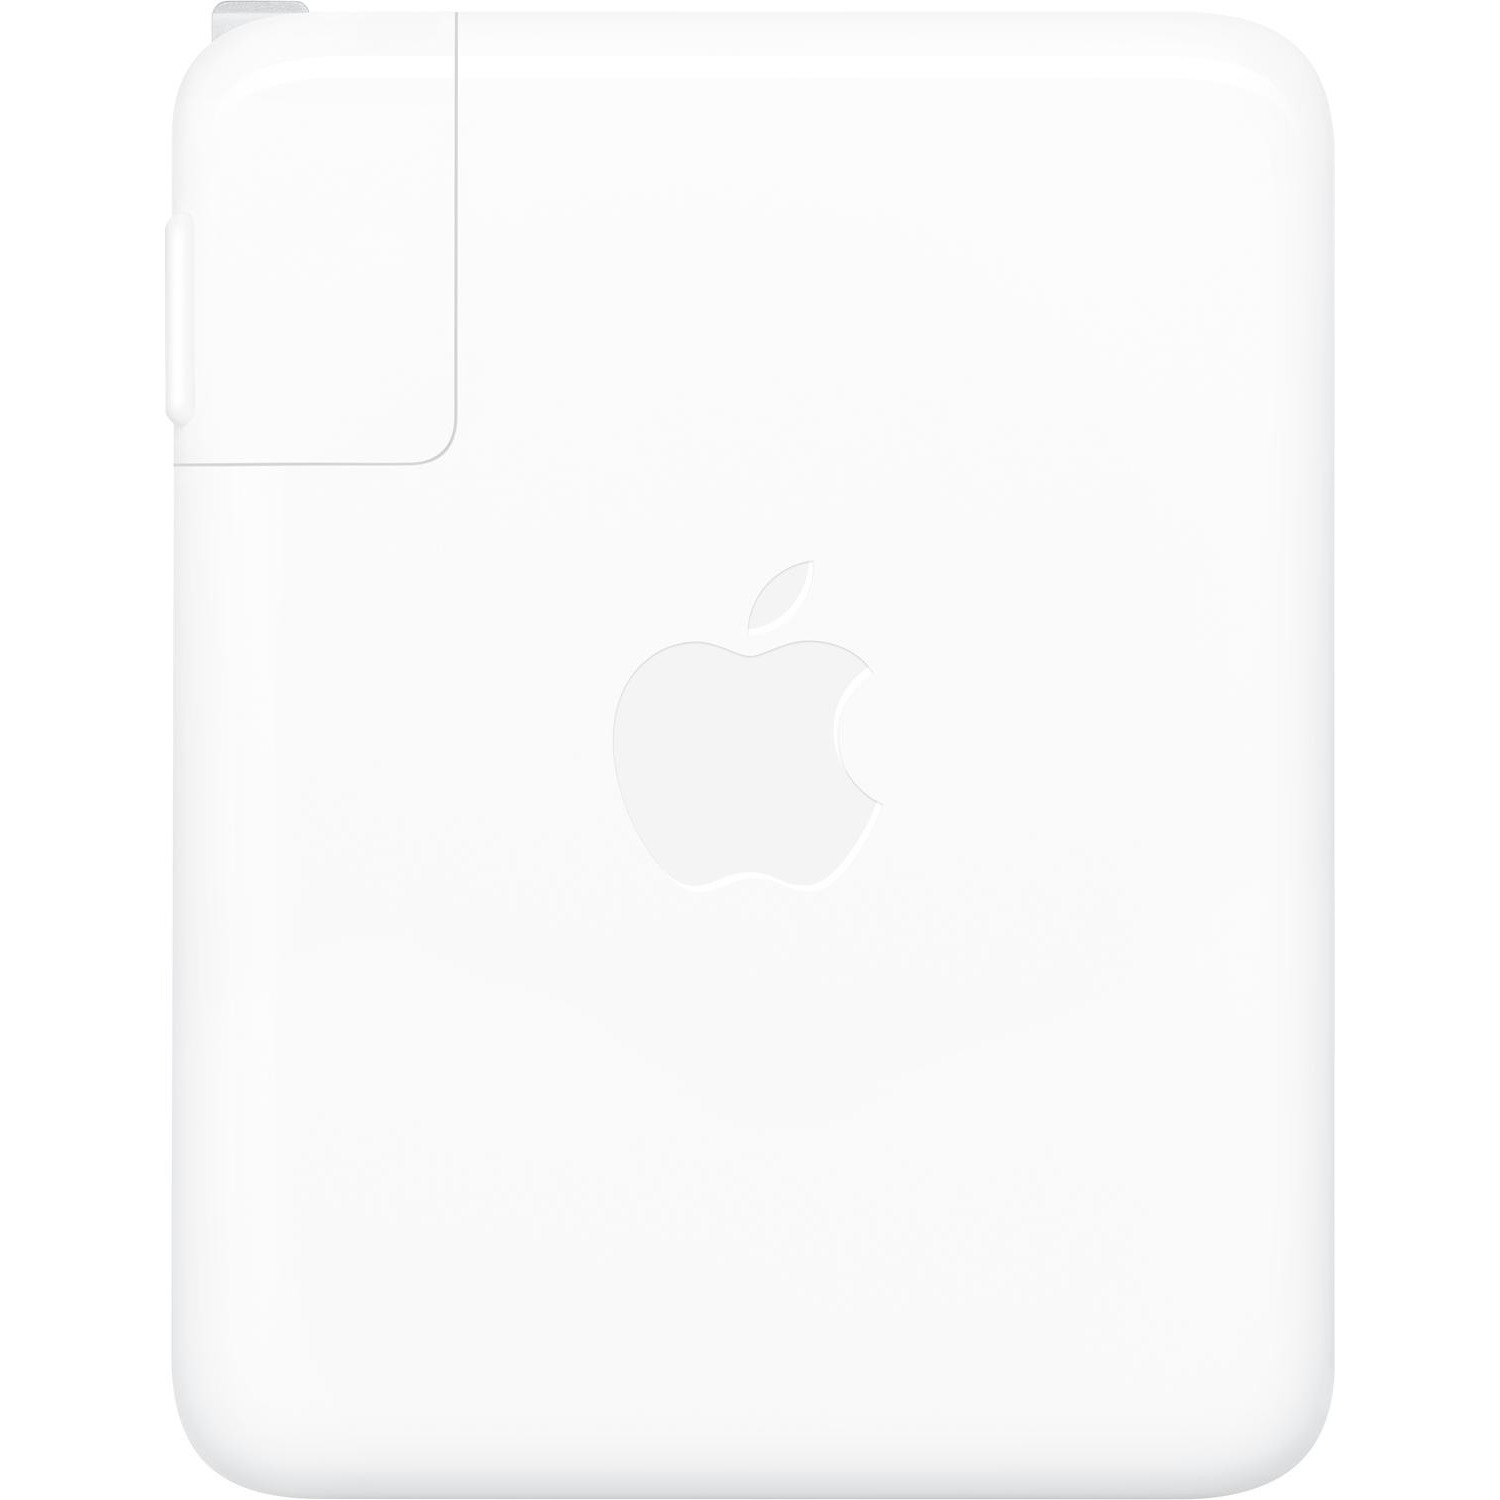 Immagine per Alimentatore Apple USB-C da 140W da DIMOStore